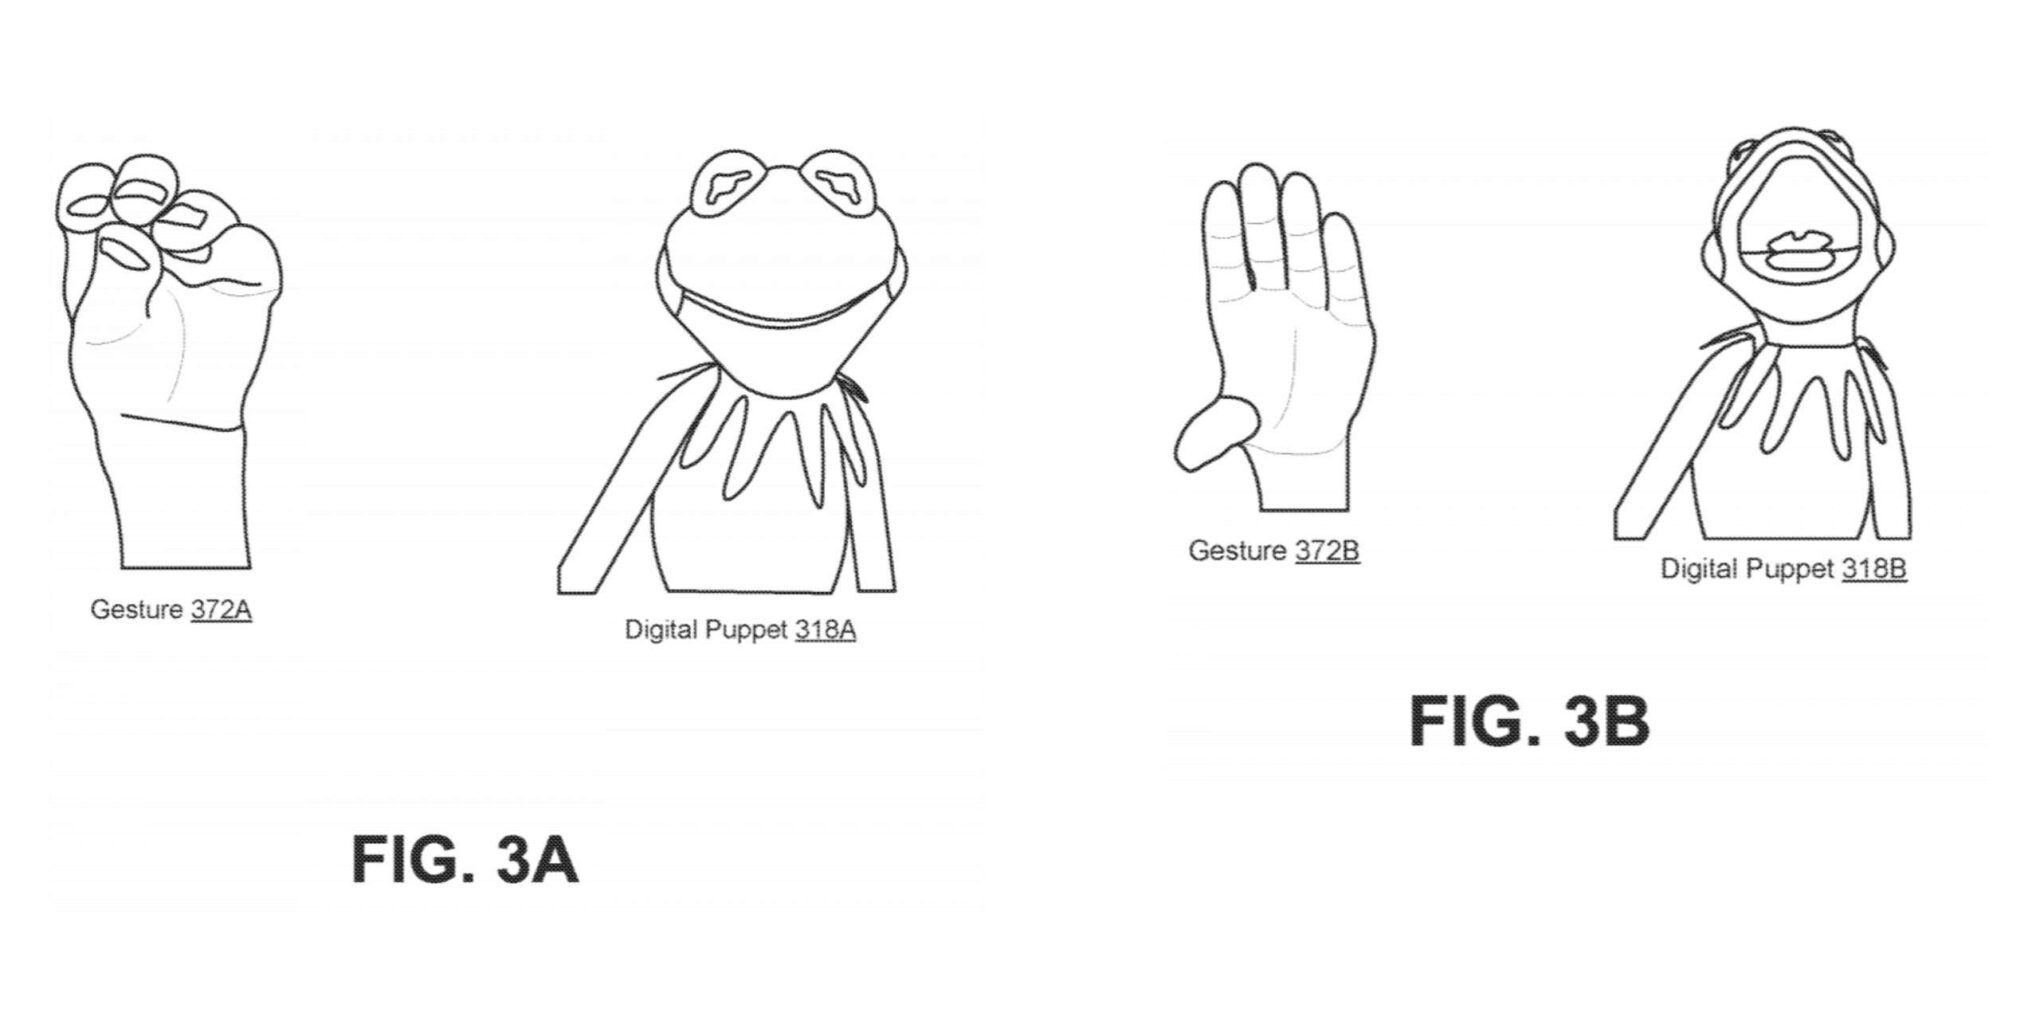 Disney's Digital Puppet Patent: Figure 3A & 3B